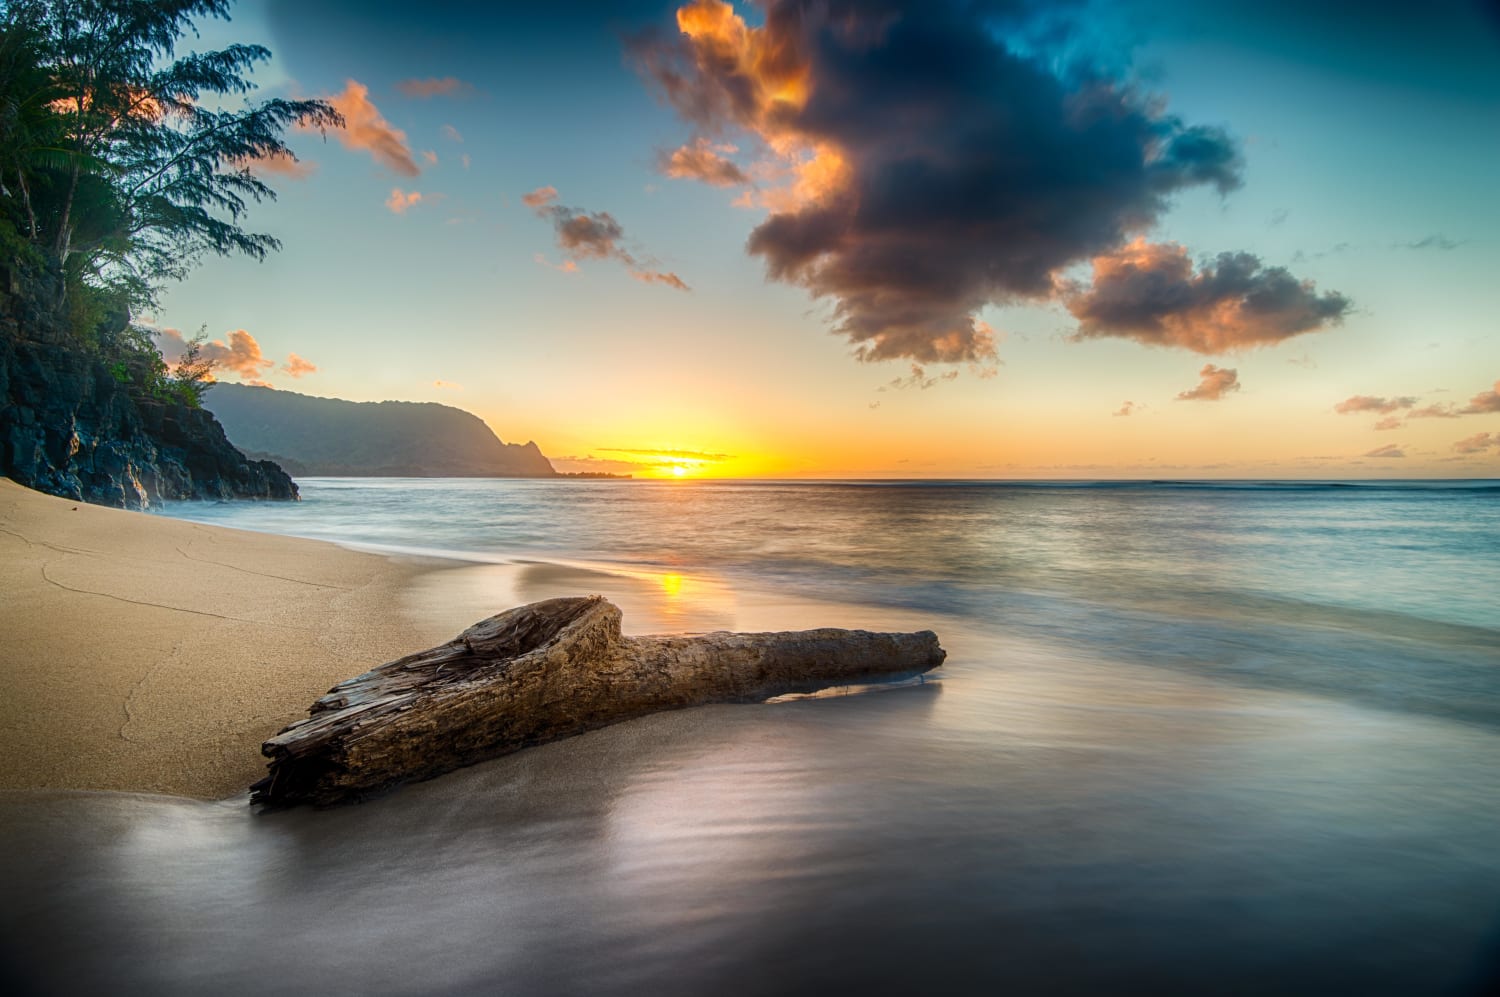 Driftwood on beach at sunset on north shore of Kauai